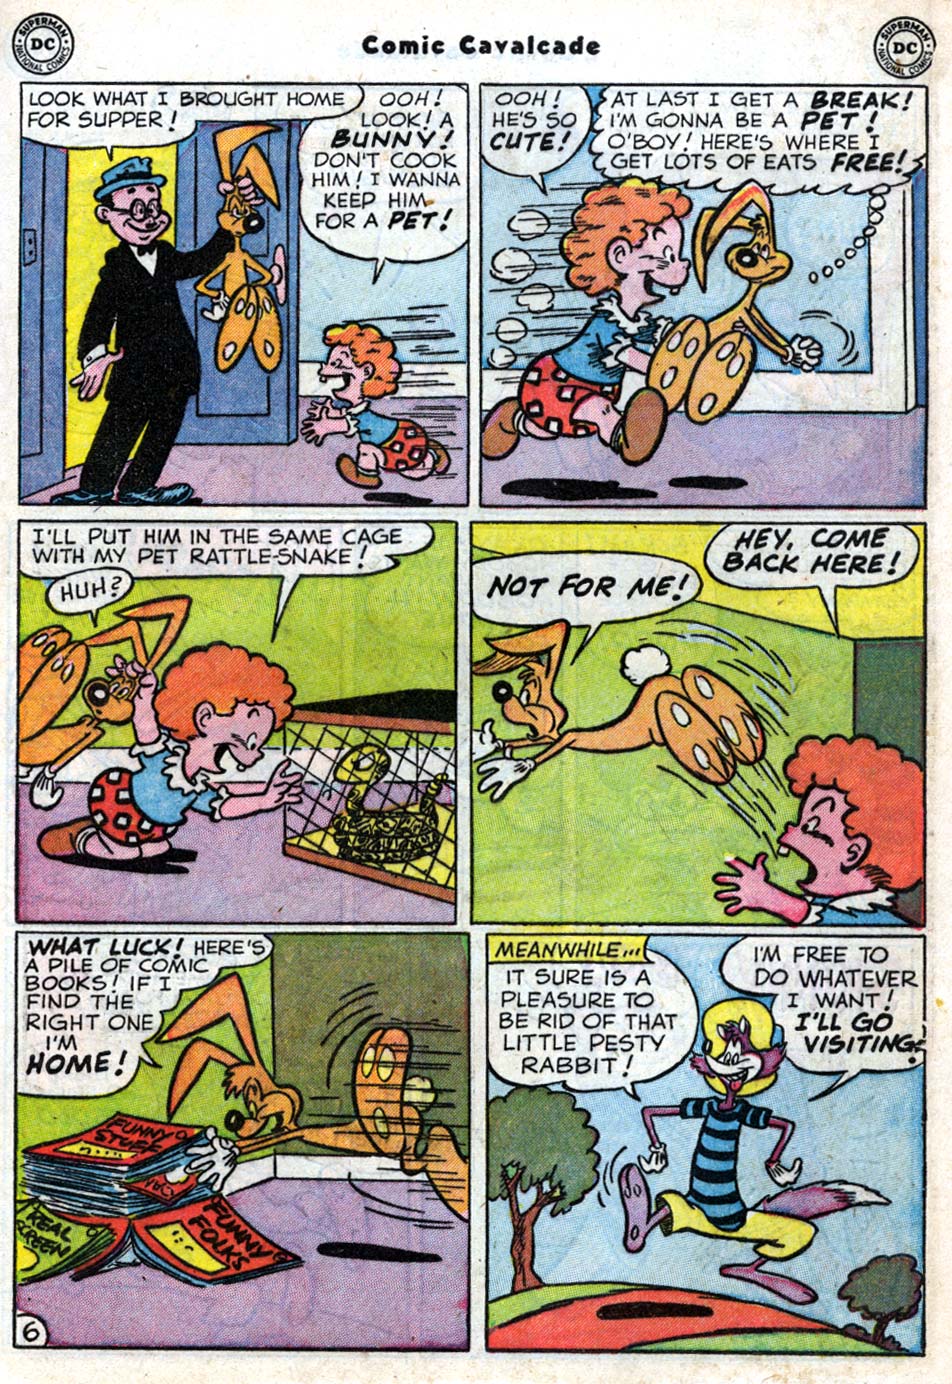 Comic Cavalcade issue 46 - Page 23